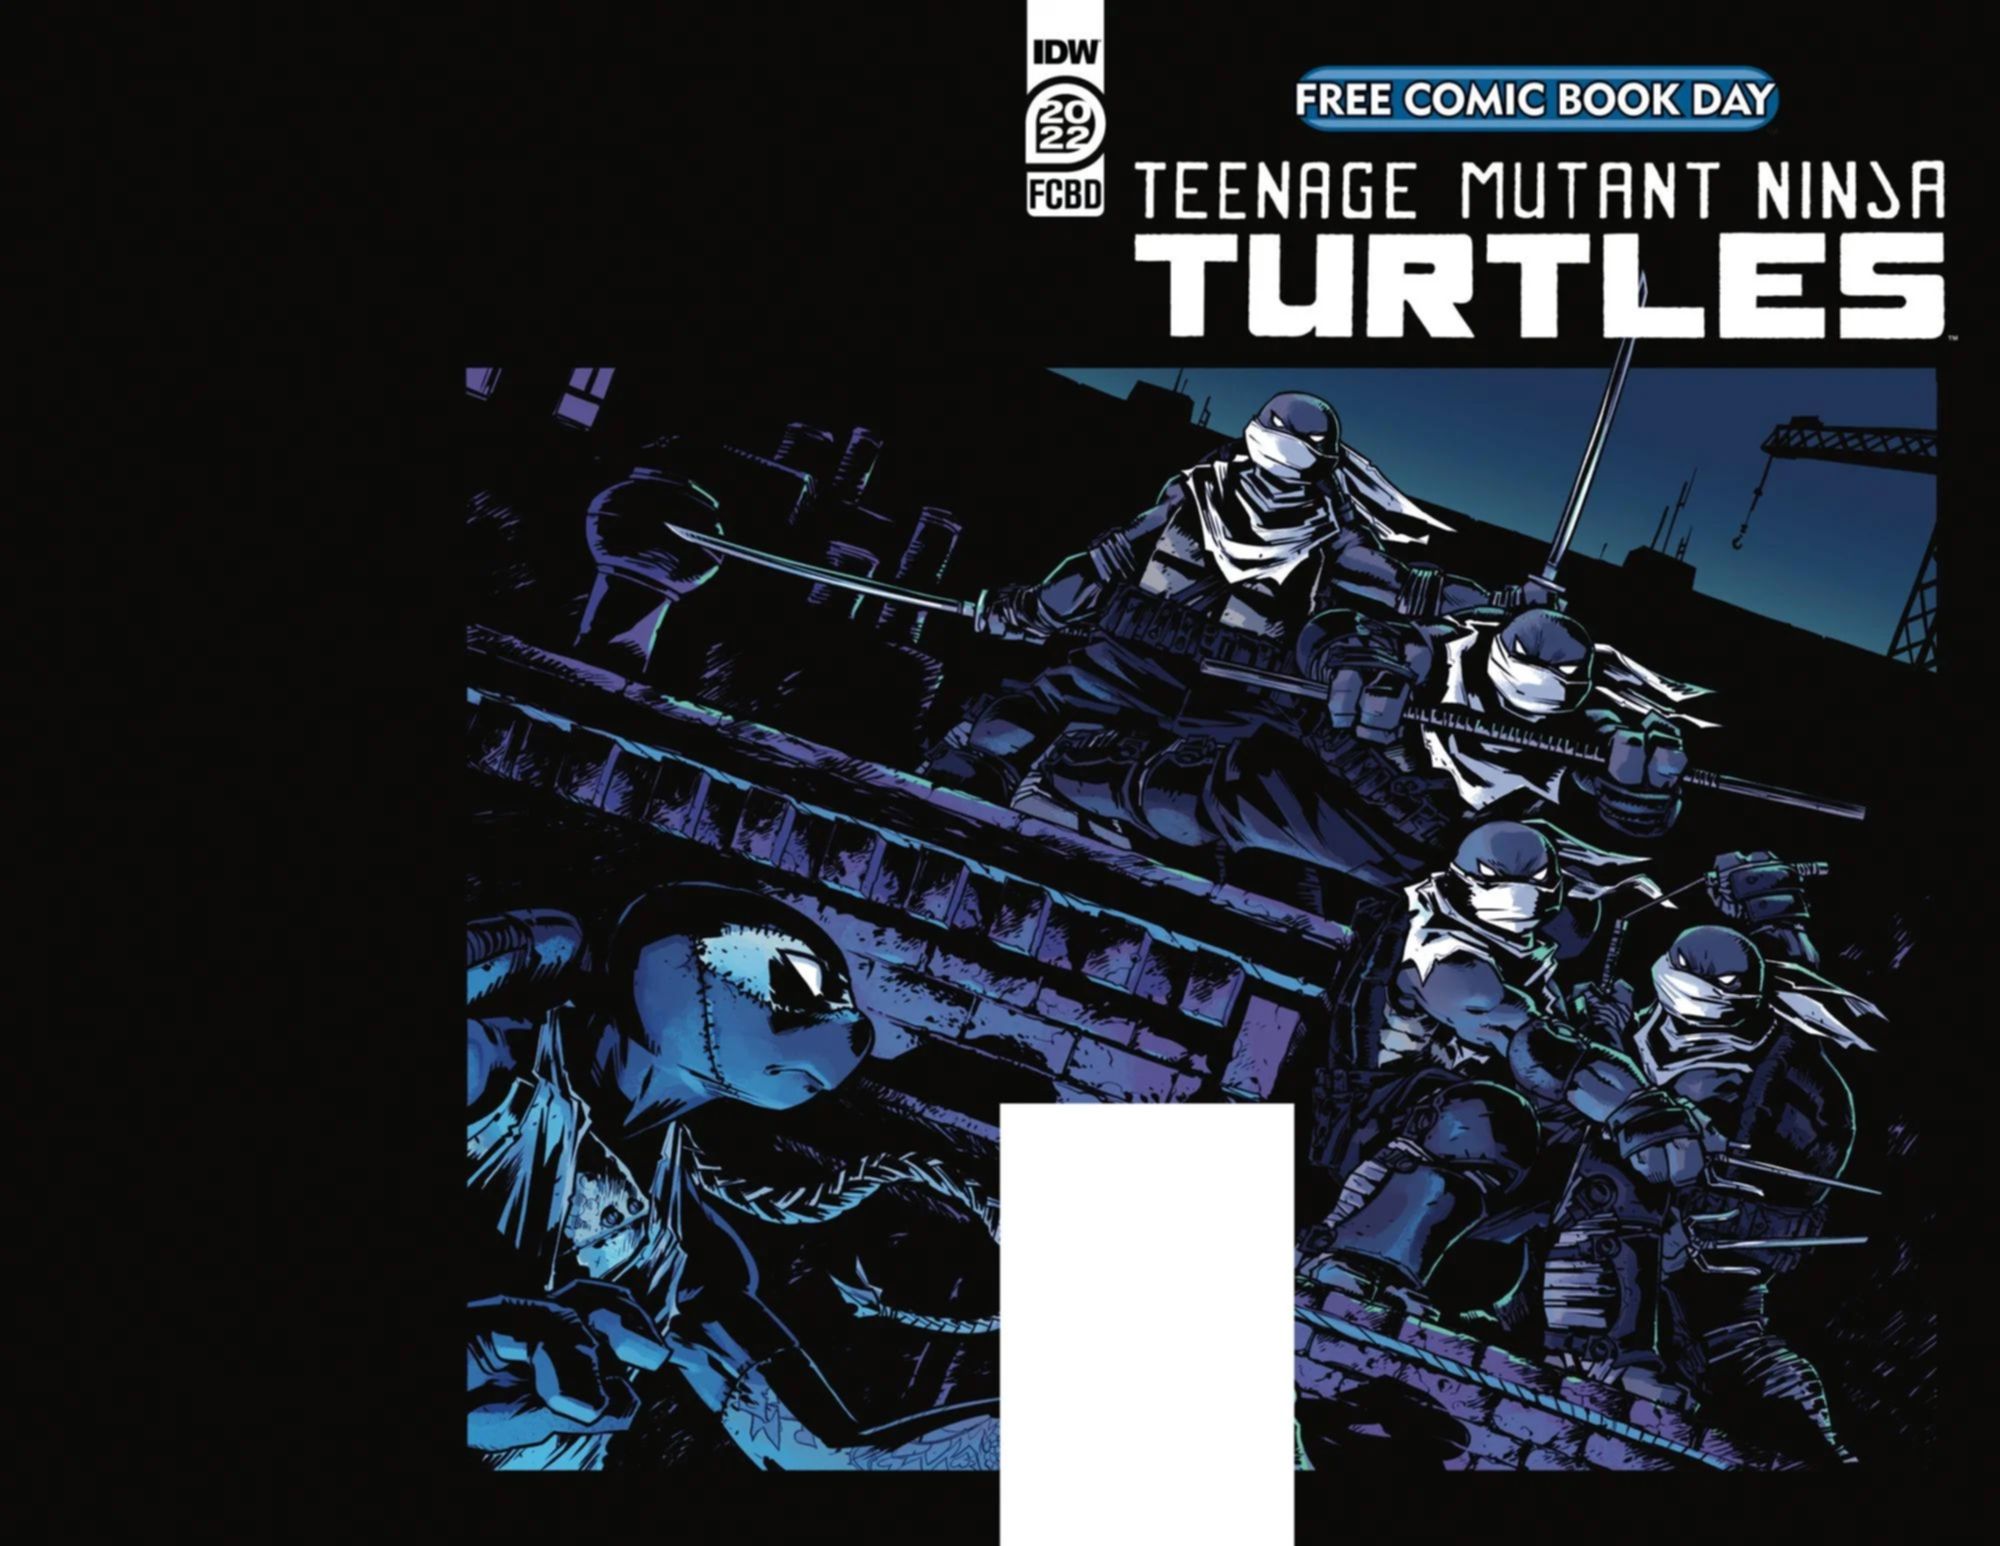 Teenage Mutant Ninja Turtles Free Comic Book Day IDW Comics